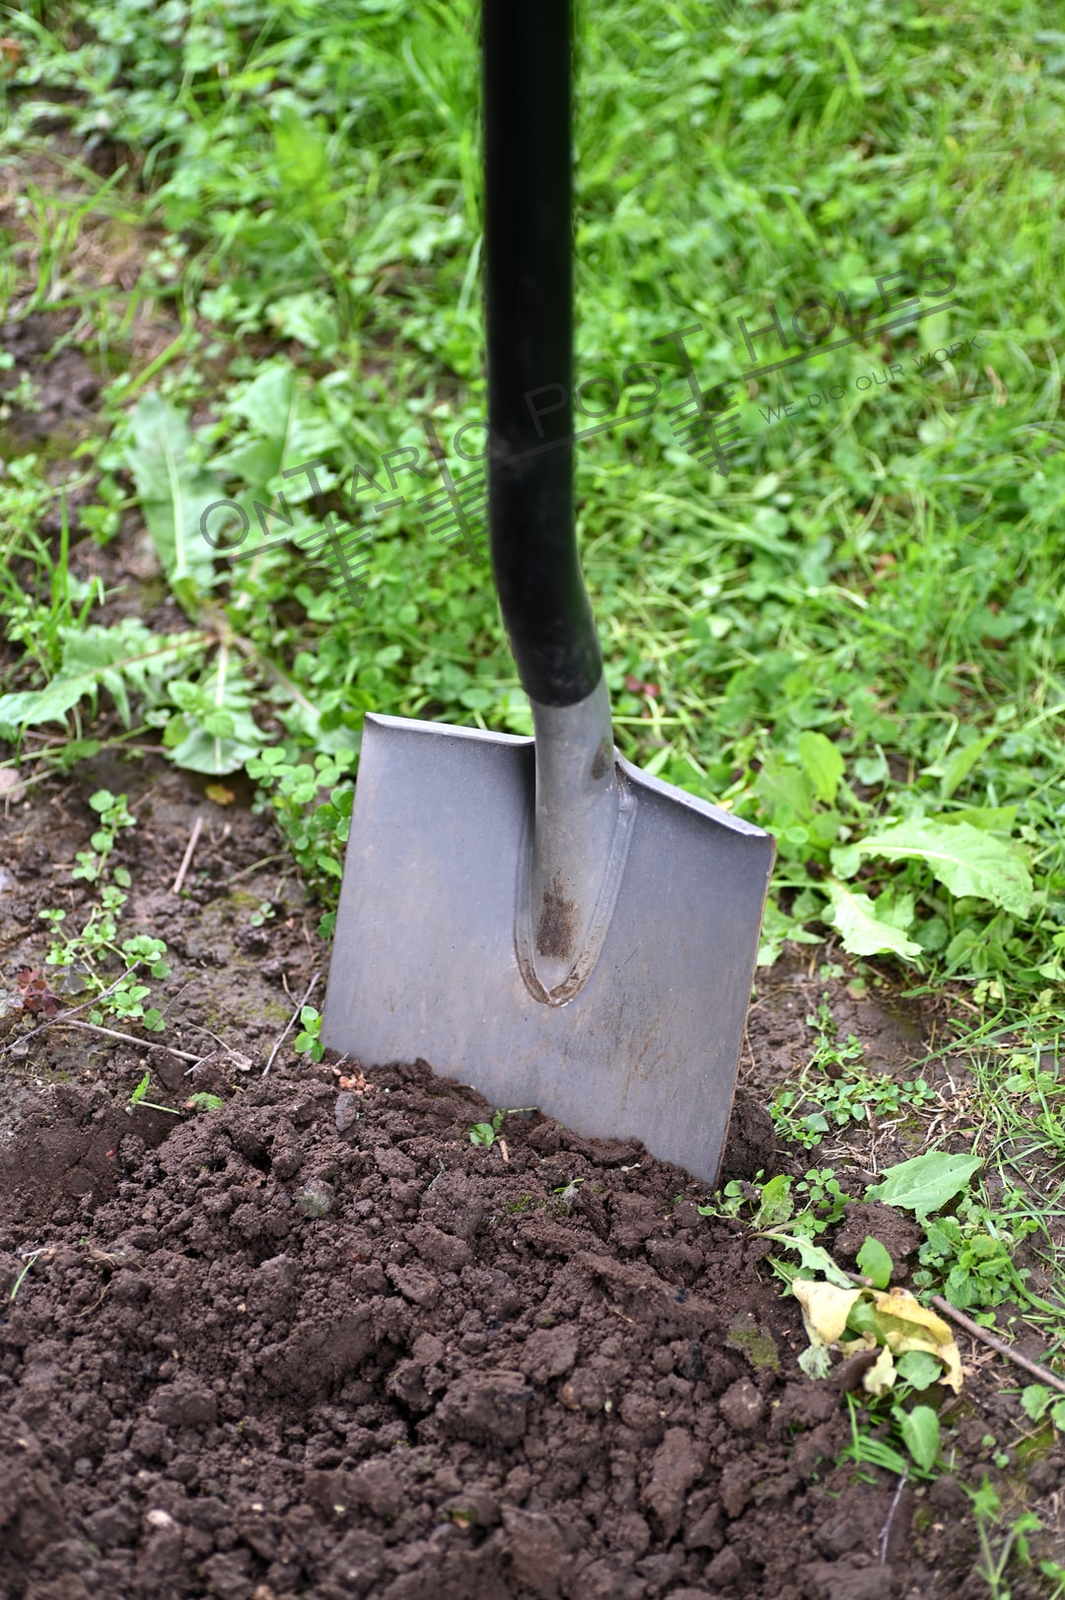 Shovel in soil digging a post hole